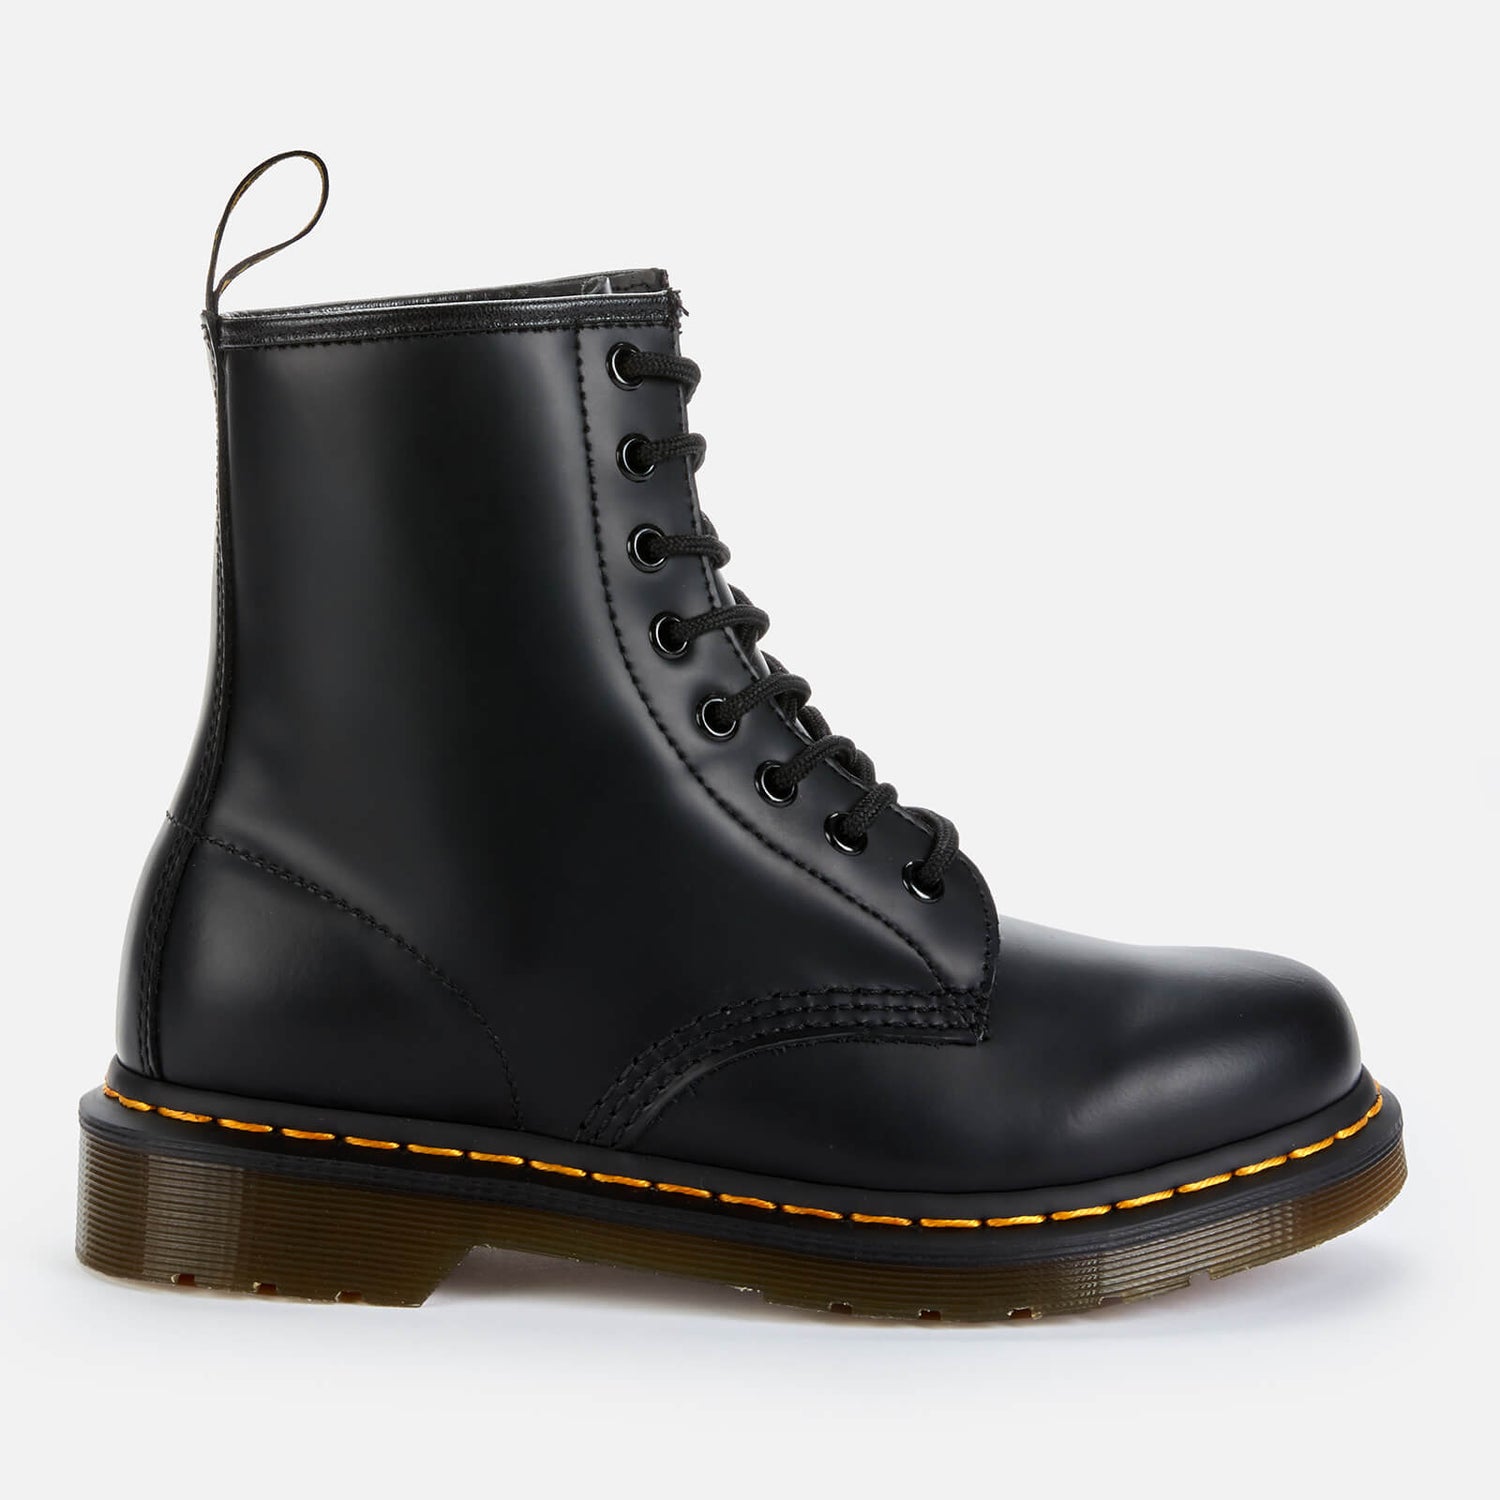 Superioriteit Kaliber mengen Dr. Martens 1460 Smooth Leather 8-Eye Boots - Black | TheHut.com